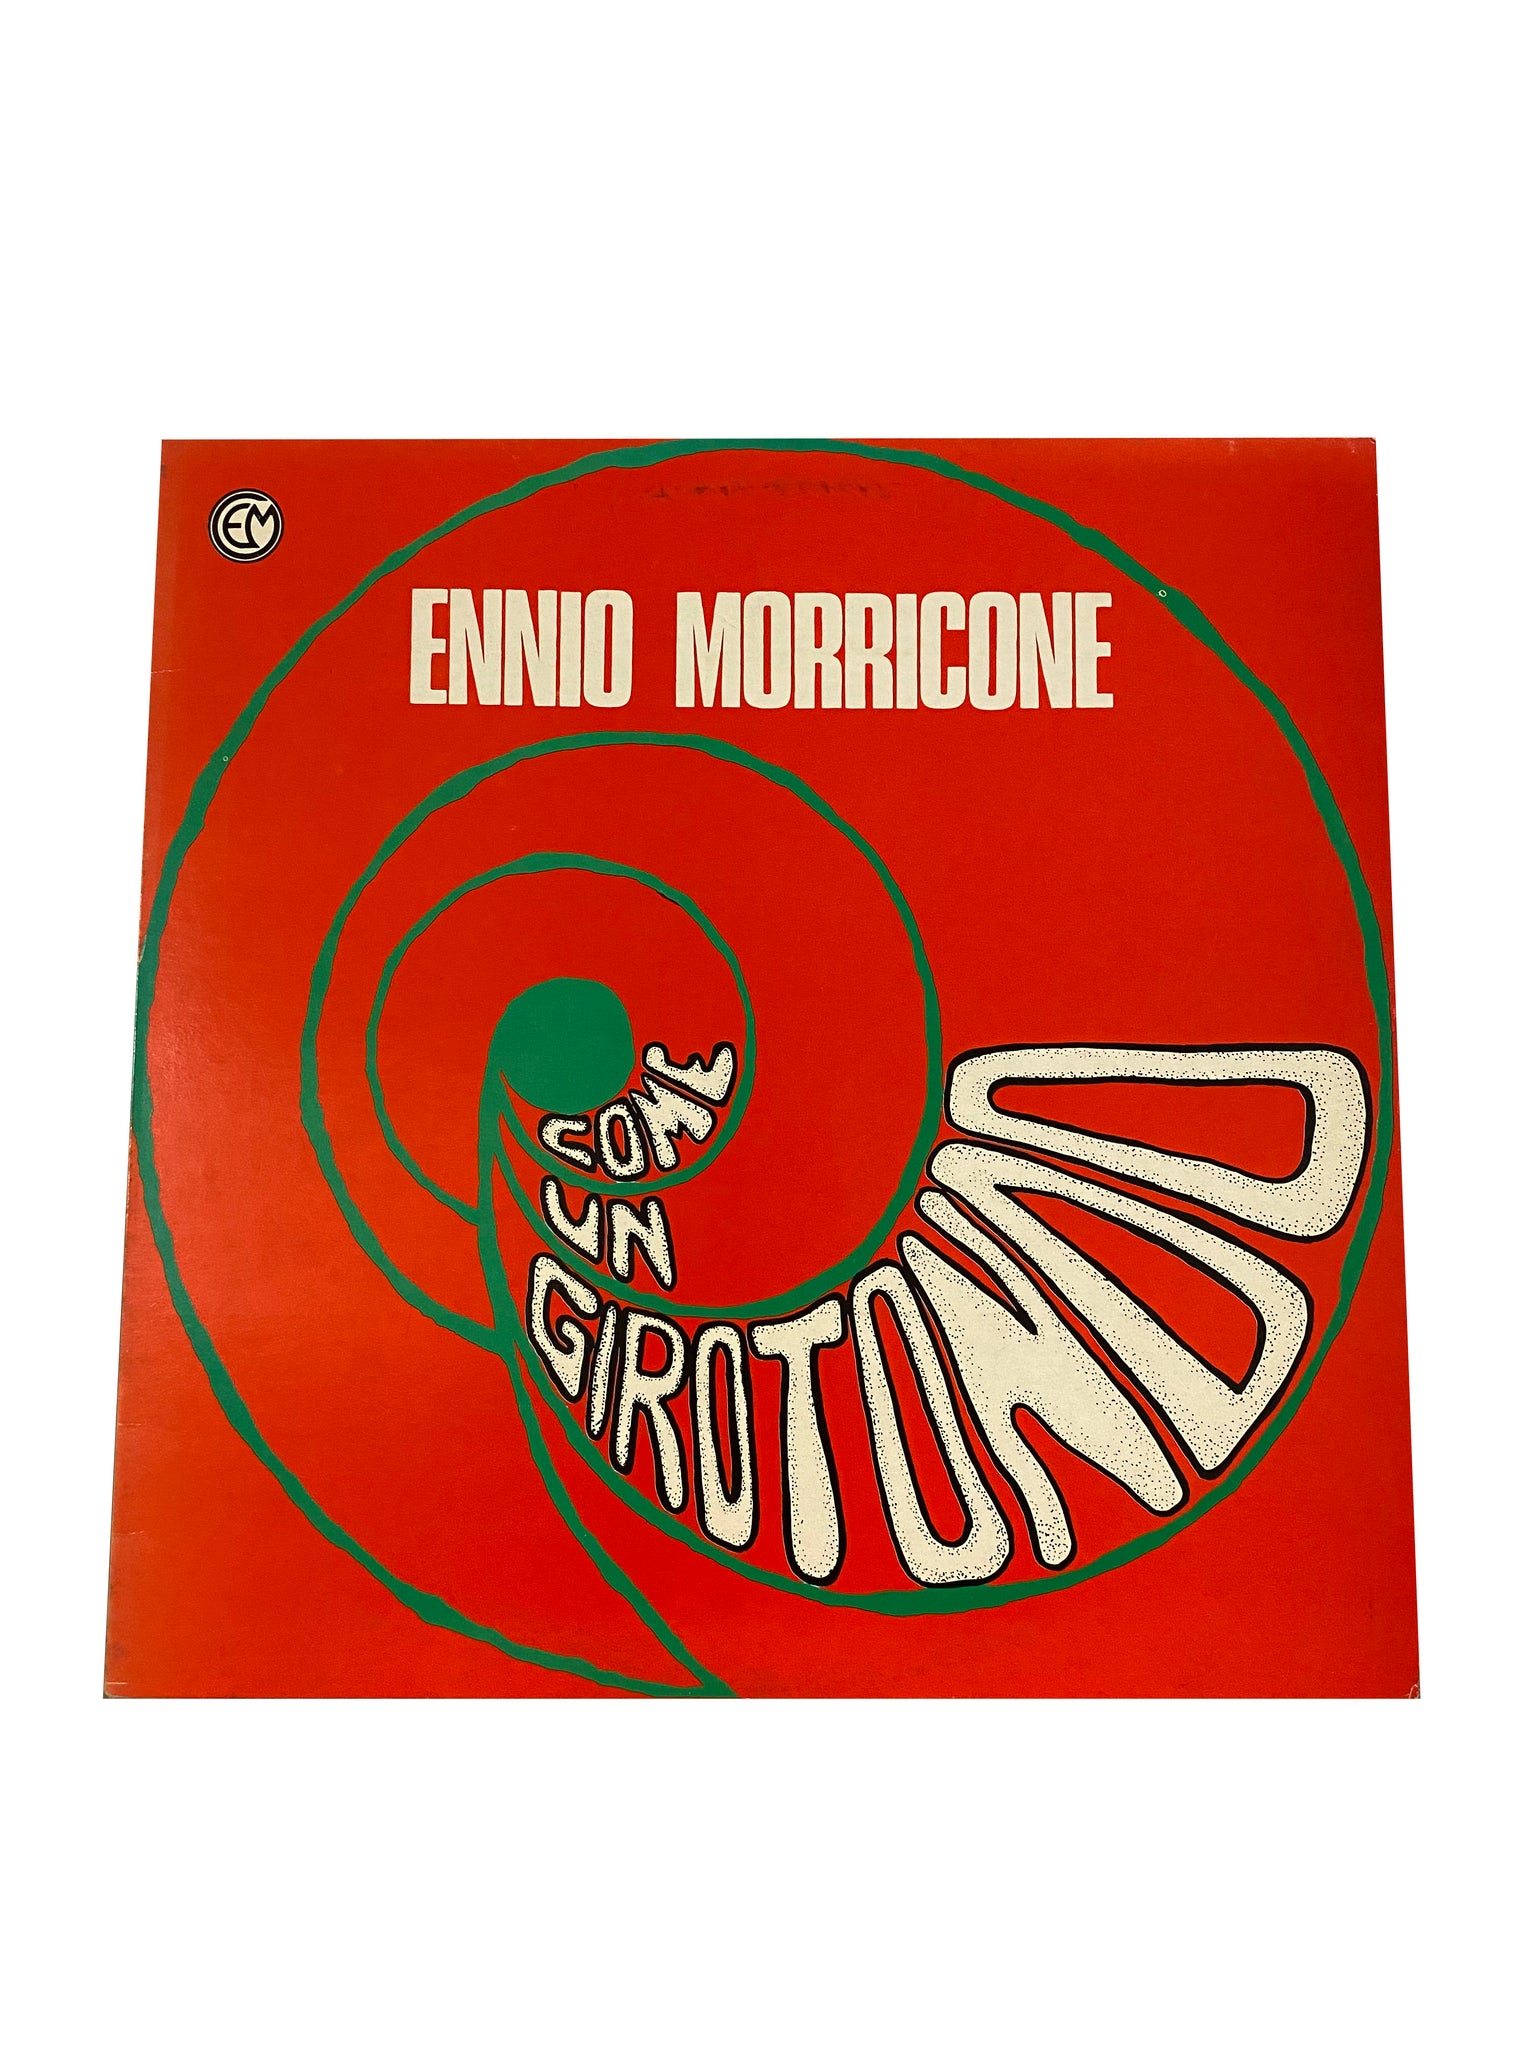 Come Un Girotondo (LP; ltd; Num), by Ennio Morricone